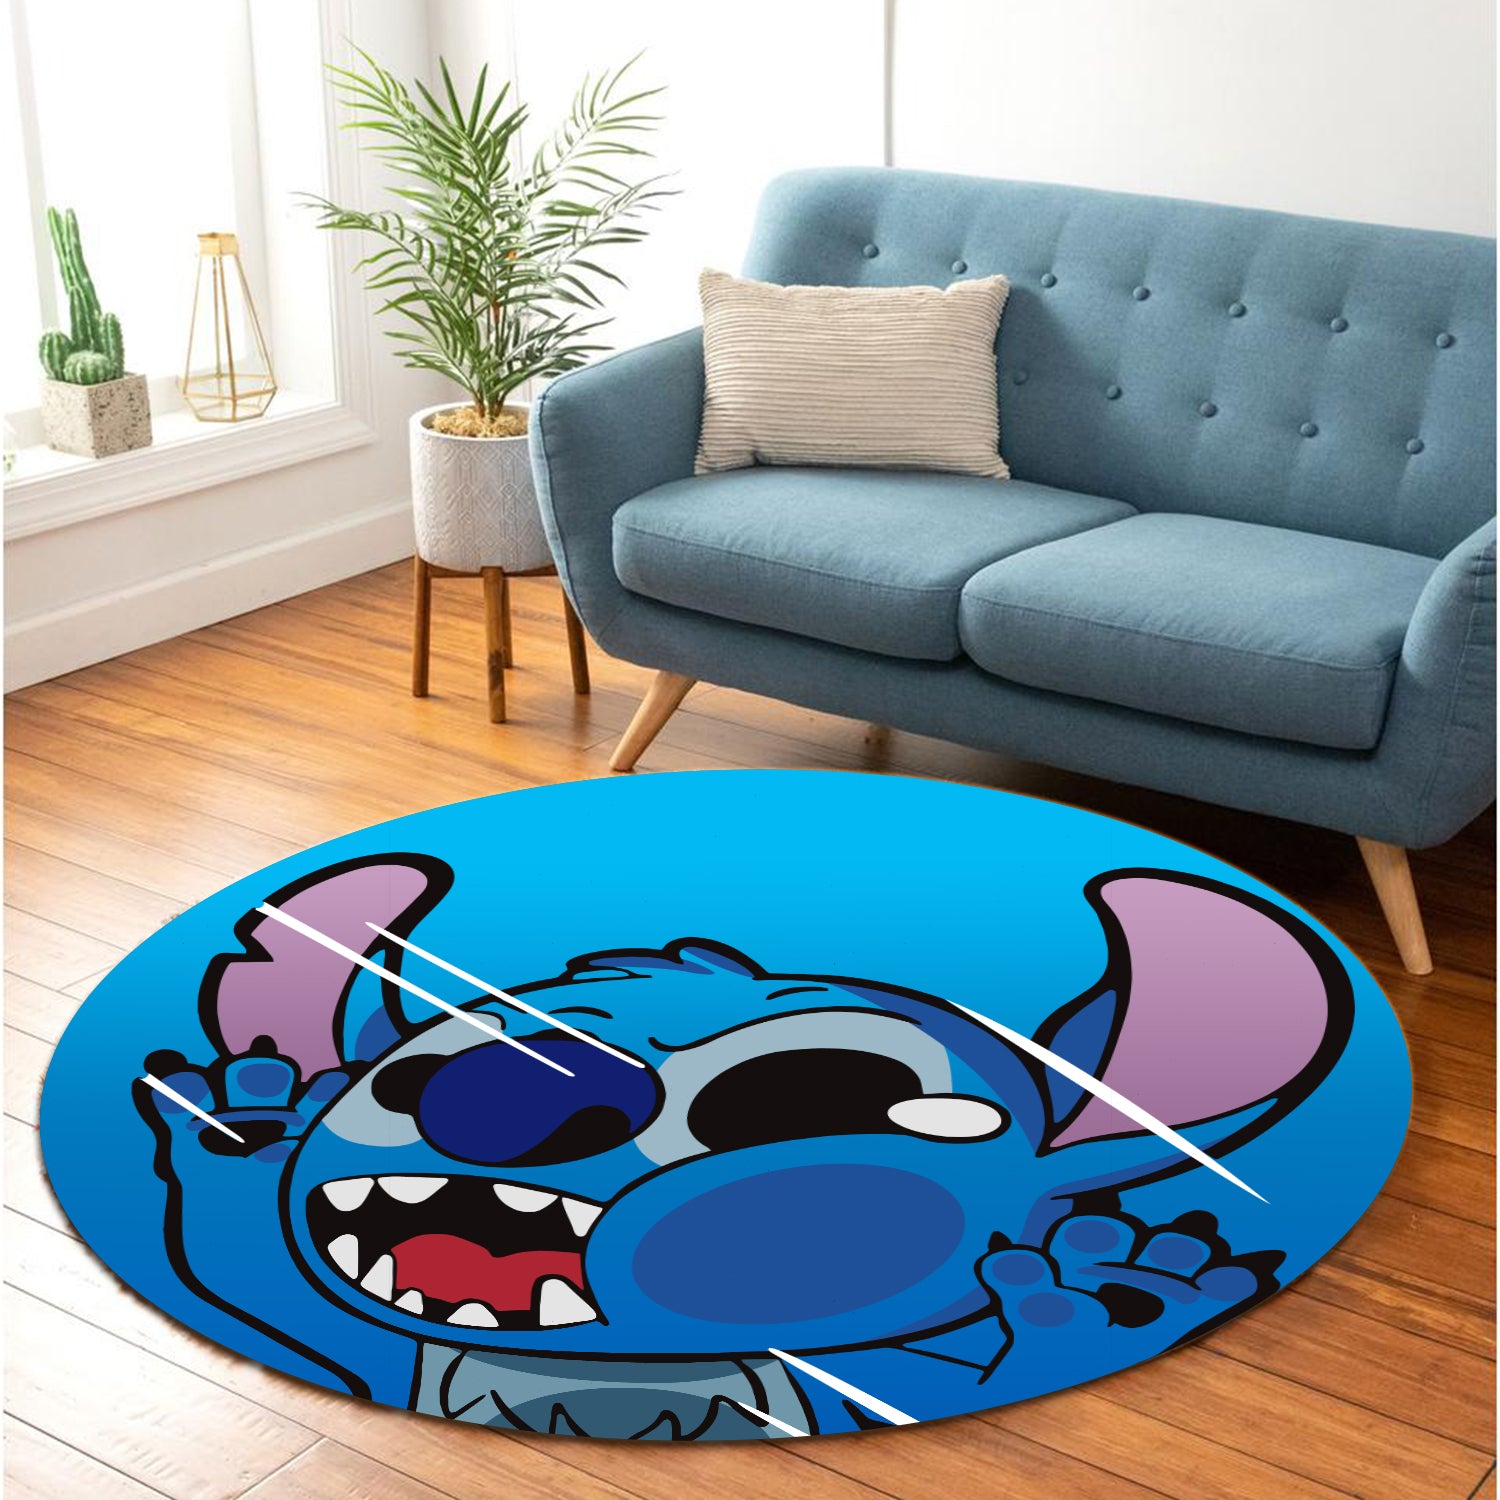 Stitch Funny Round Carpet Rug Bedroom Livingroom Home Decor Nearkii